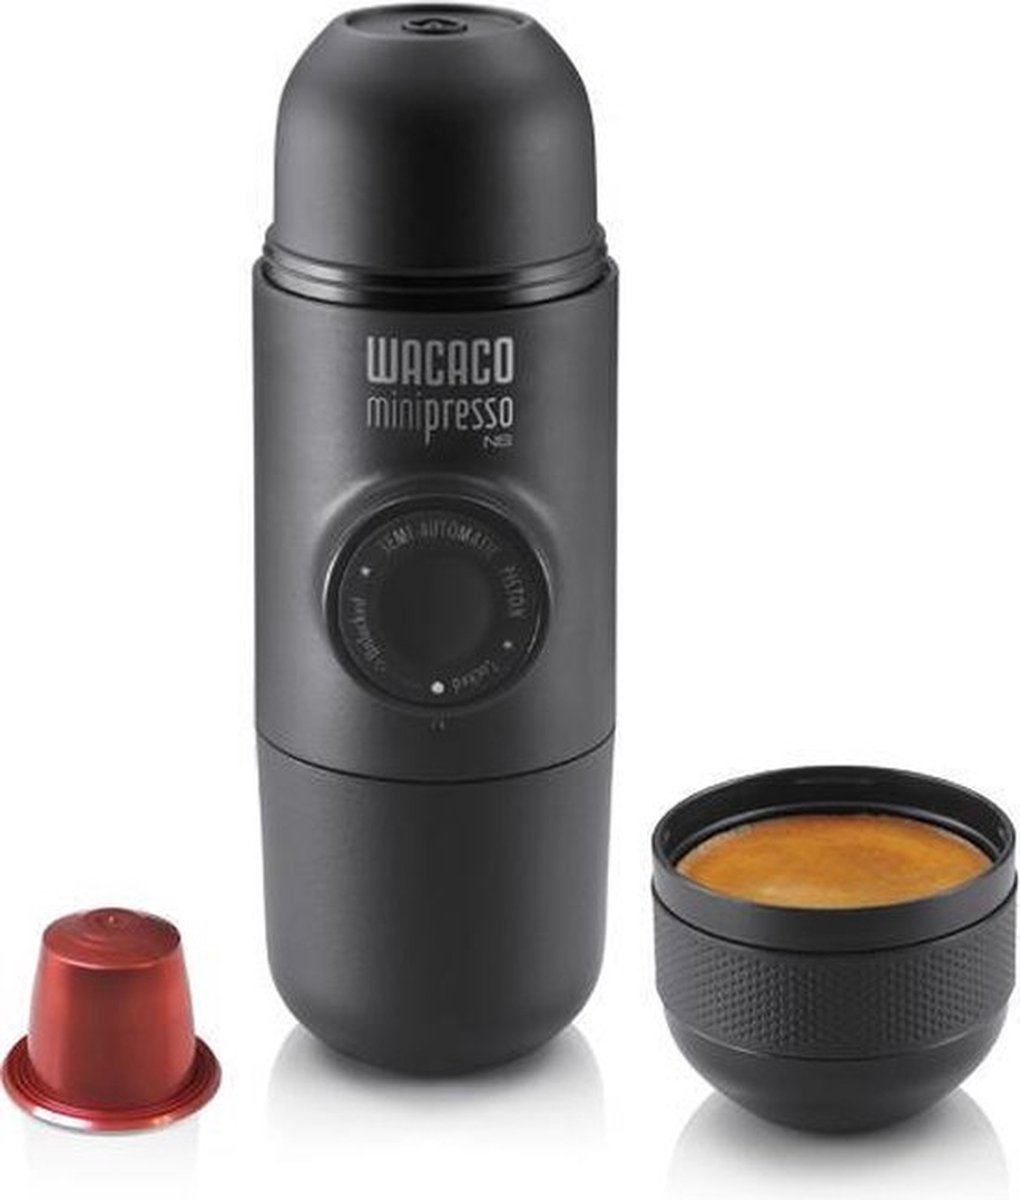 Wacaco portable espresso apparaat MINIPRESSO NS (Grijs) - Zwart